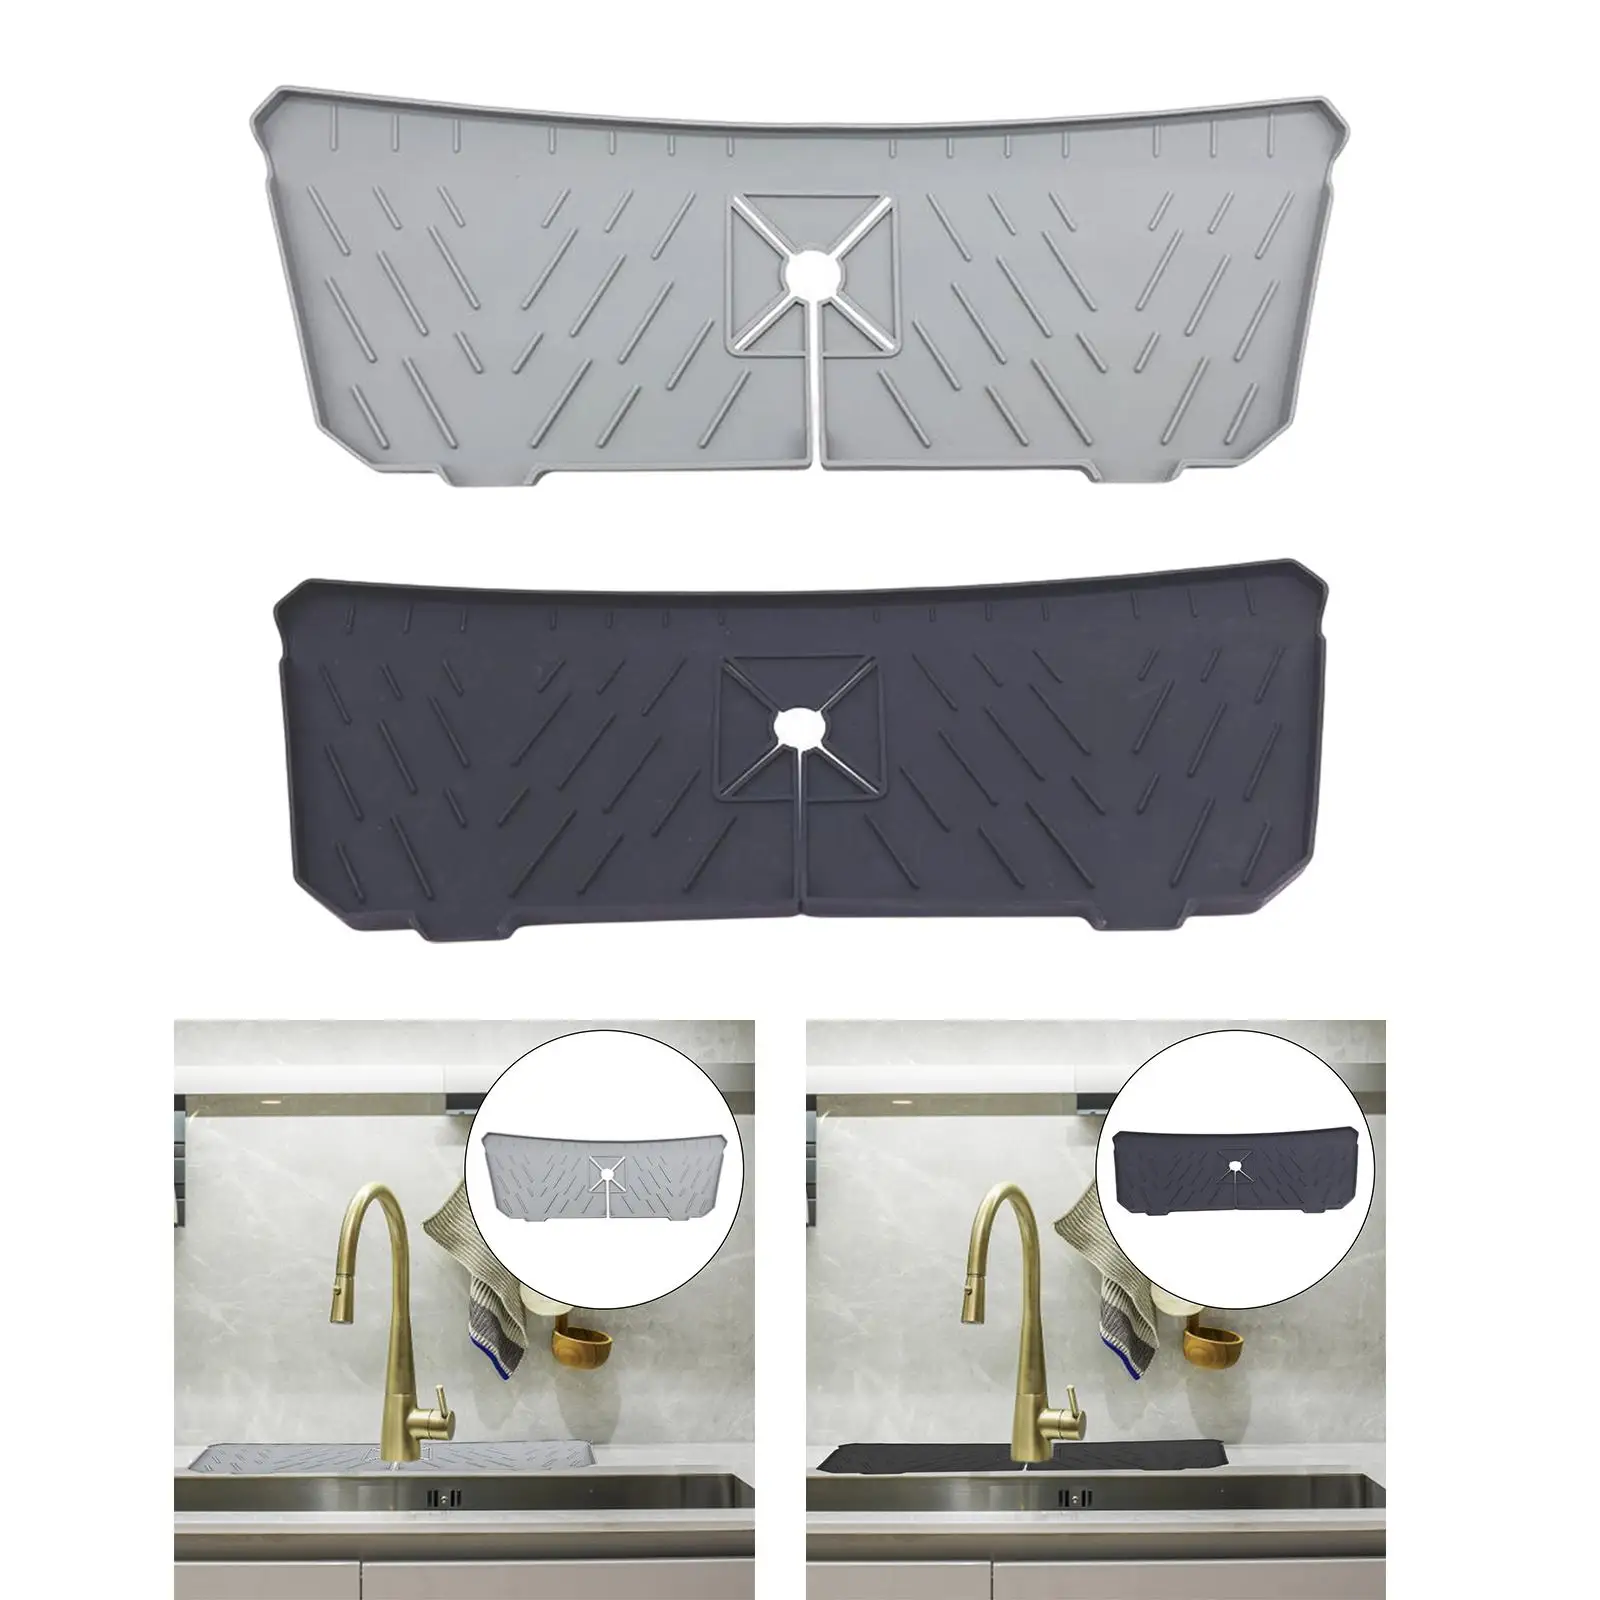 Sink splashing Guard Mats Countertop Protector Protection Mat for Bathroom